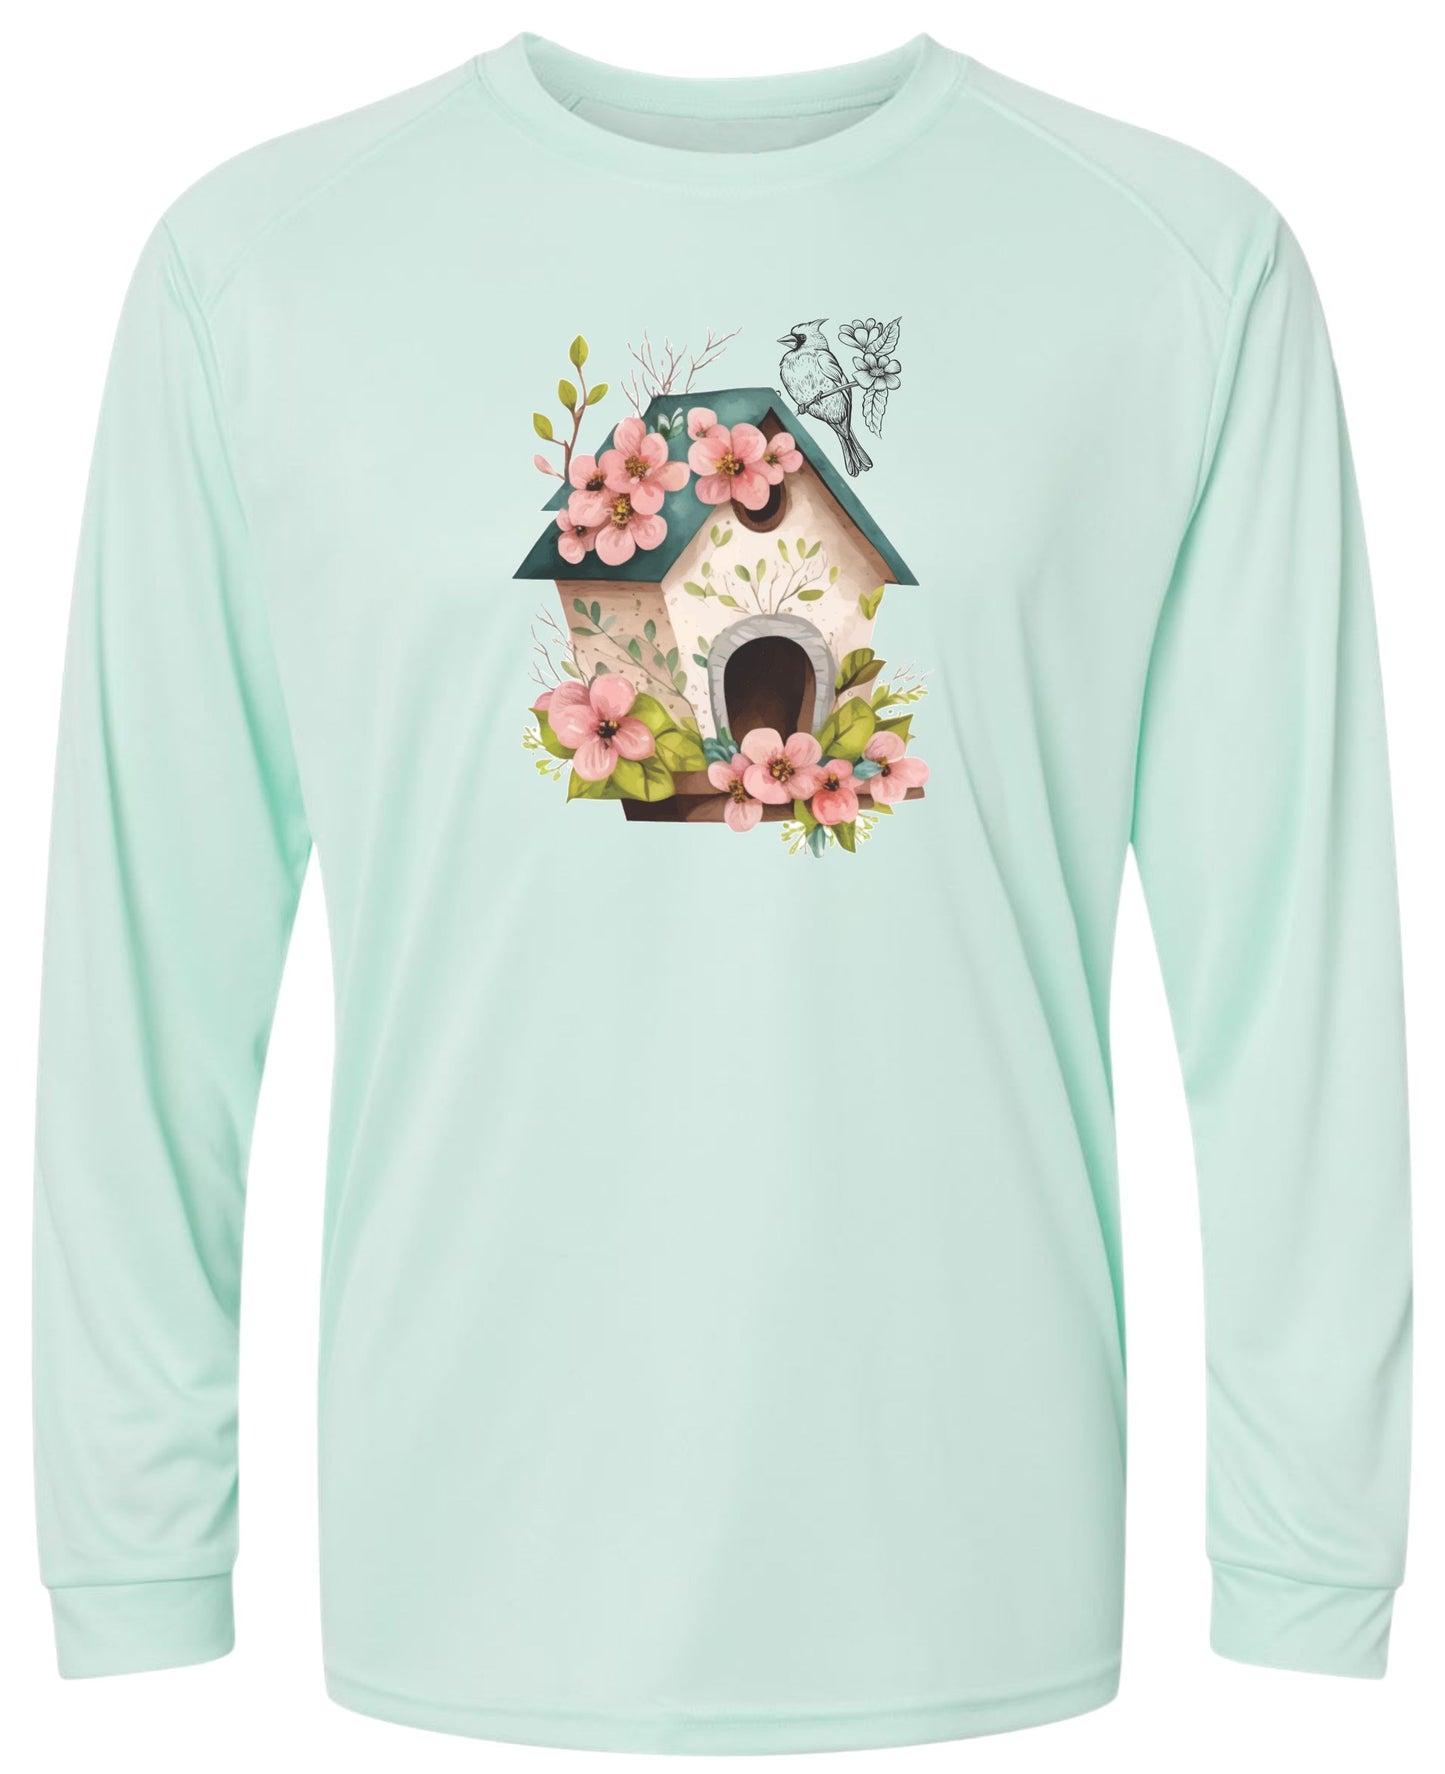 90 LW Bird House Long Sleeve UPF 50+ Shirt Lake Shirt Gardening Shirt Beach Shirt Outdoor Shirt Casual Shirt